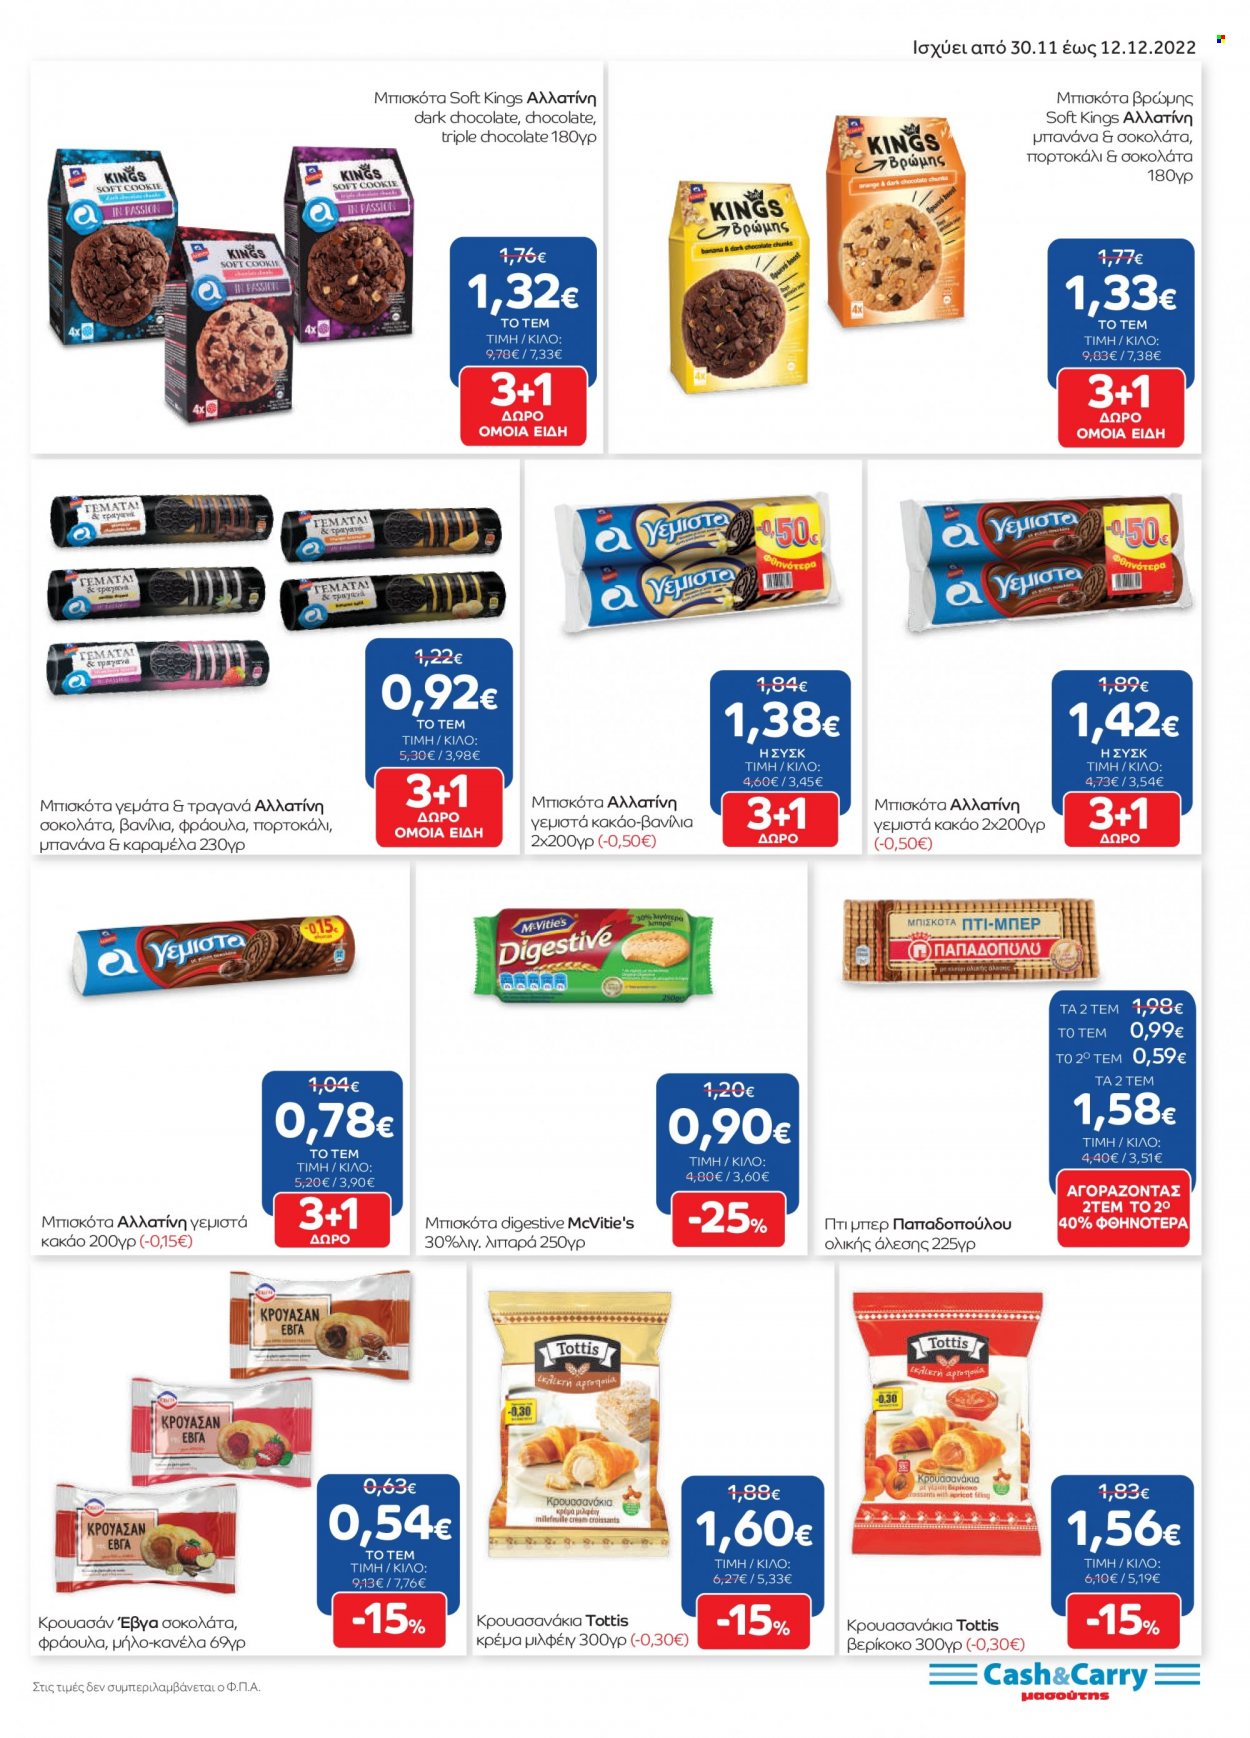 thumbnail - Φυλλάδια Masoutis Cash & Carry - 30.11.2022 - 12.12.2022 - Εκπτωτικά προϊόντα - μπισκότα, κακάο. Σελίδα 11.